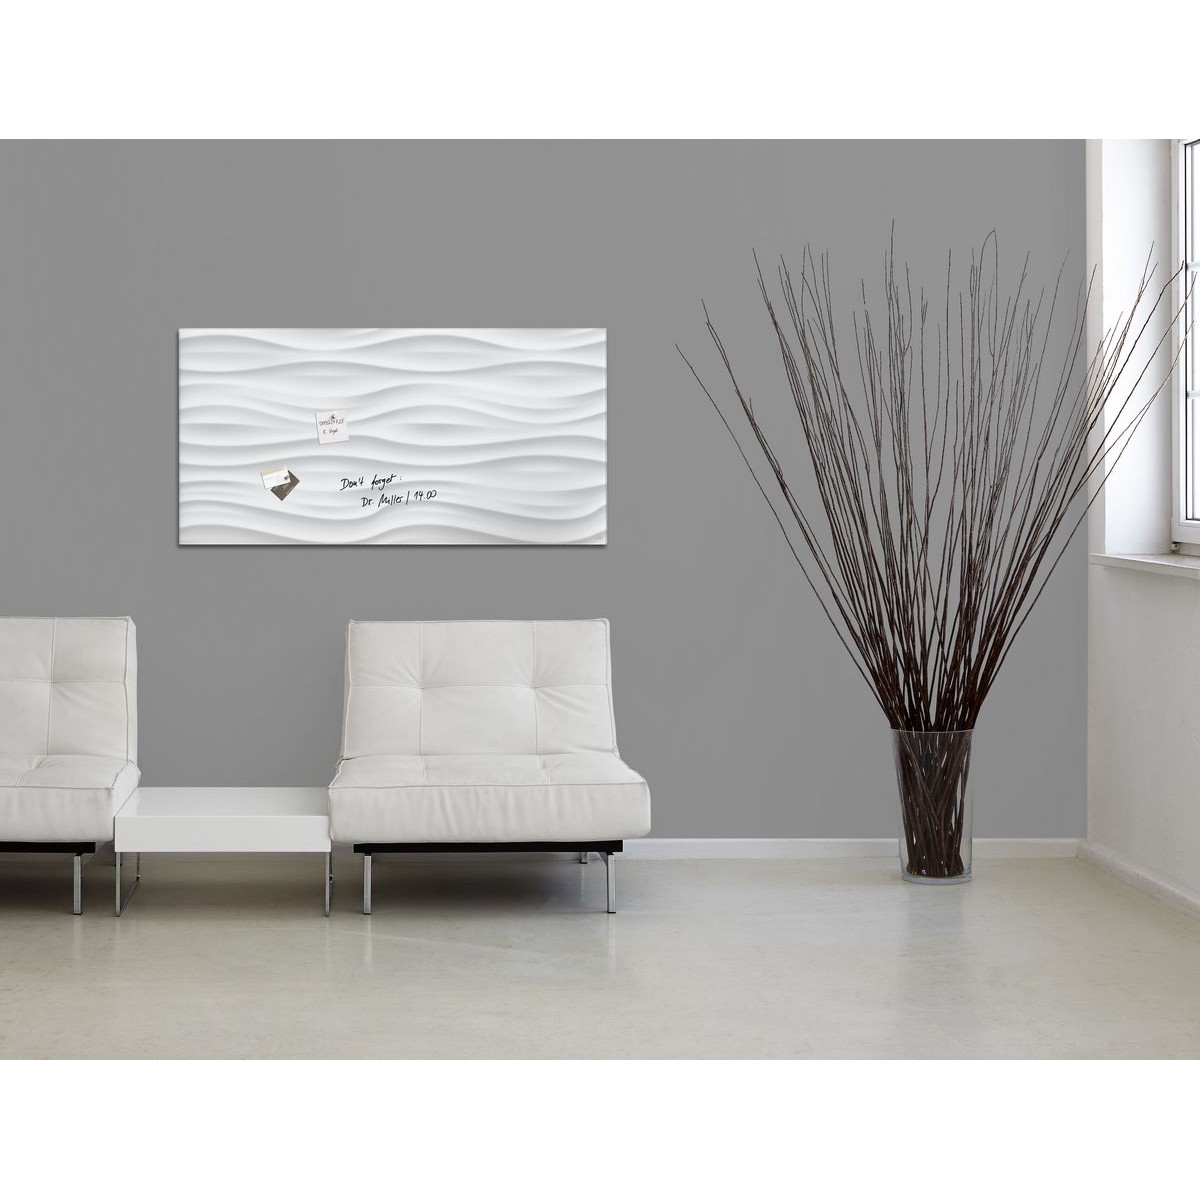 GL260 - Sigel - Magnetic Glass Board - White-Wave - 91 x 46 cm 